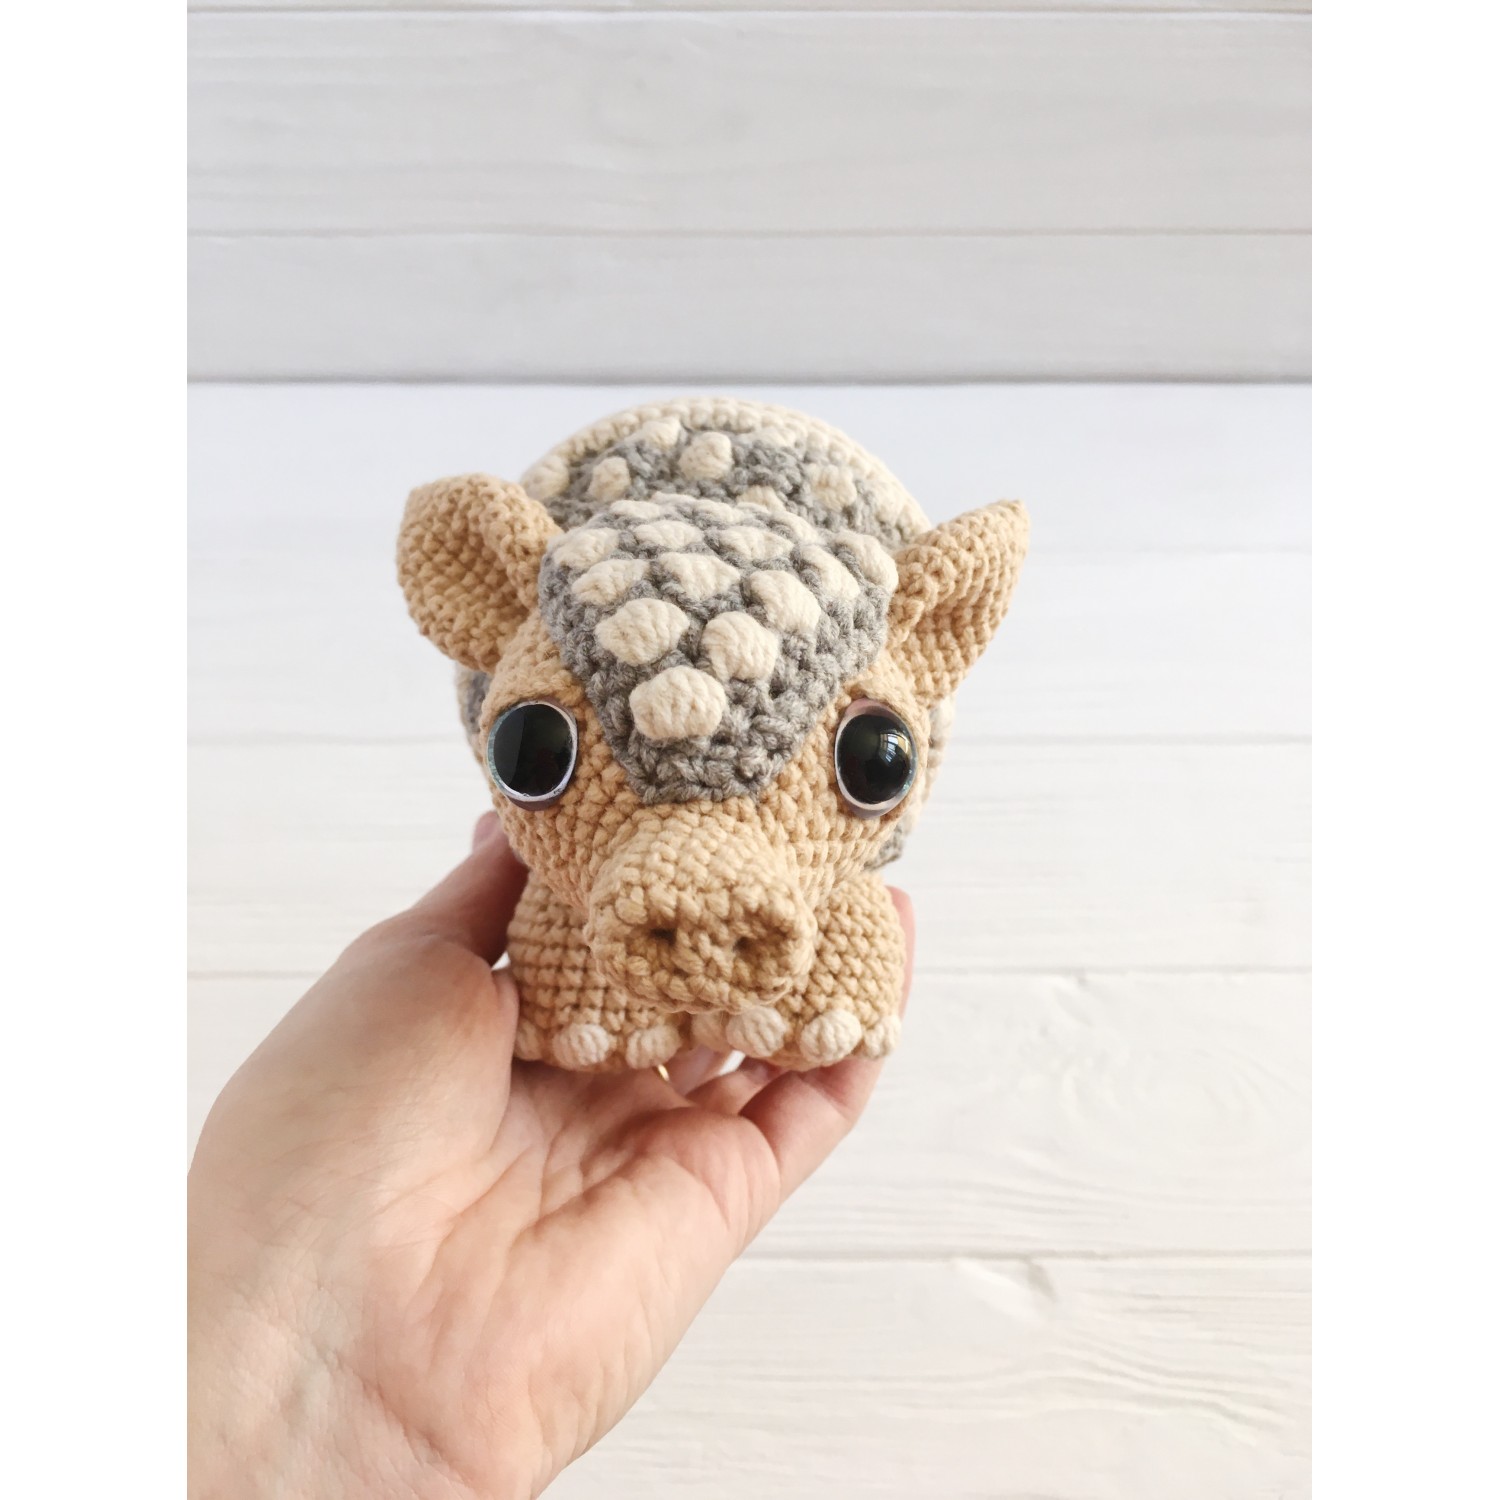 Emotional Support Armadillo Plush Stuffed Animal Personalized Gift Toy 